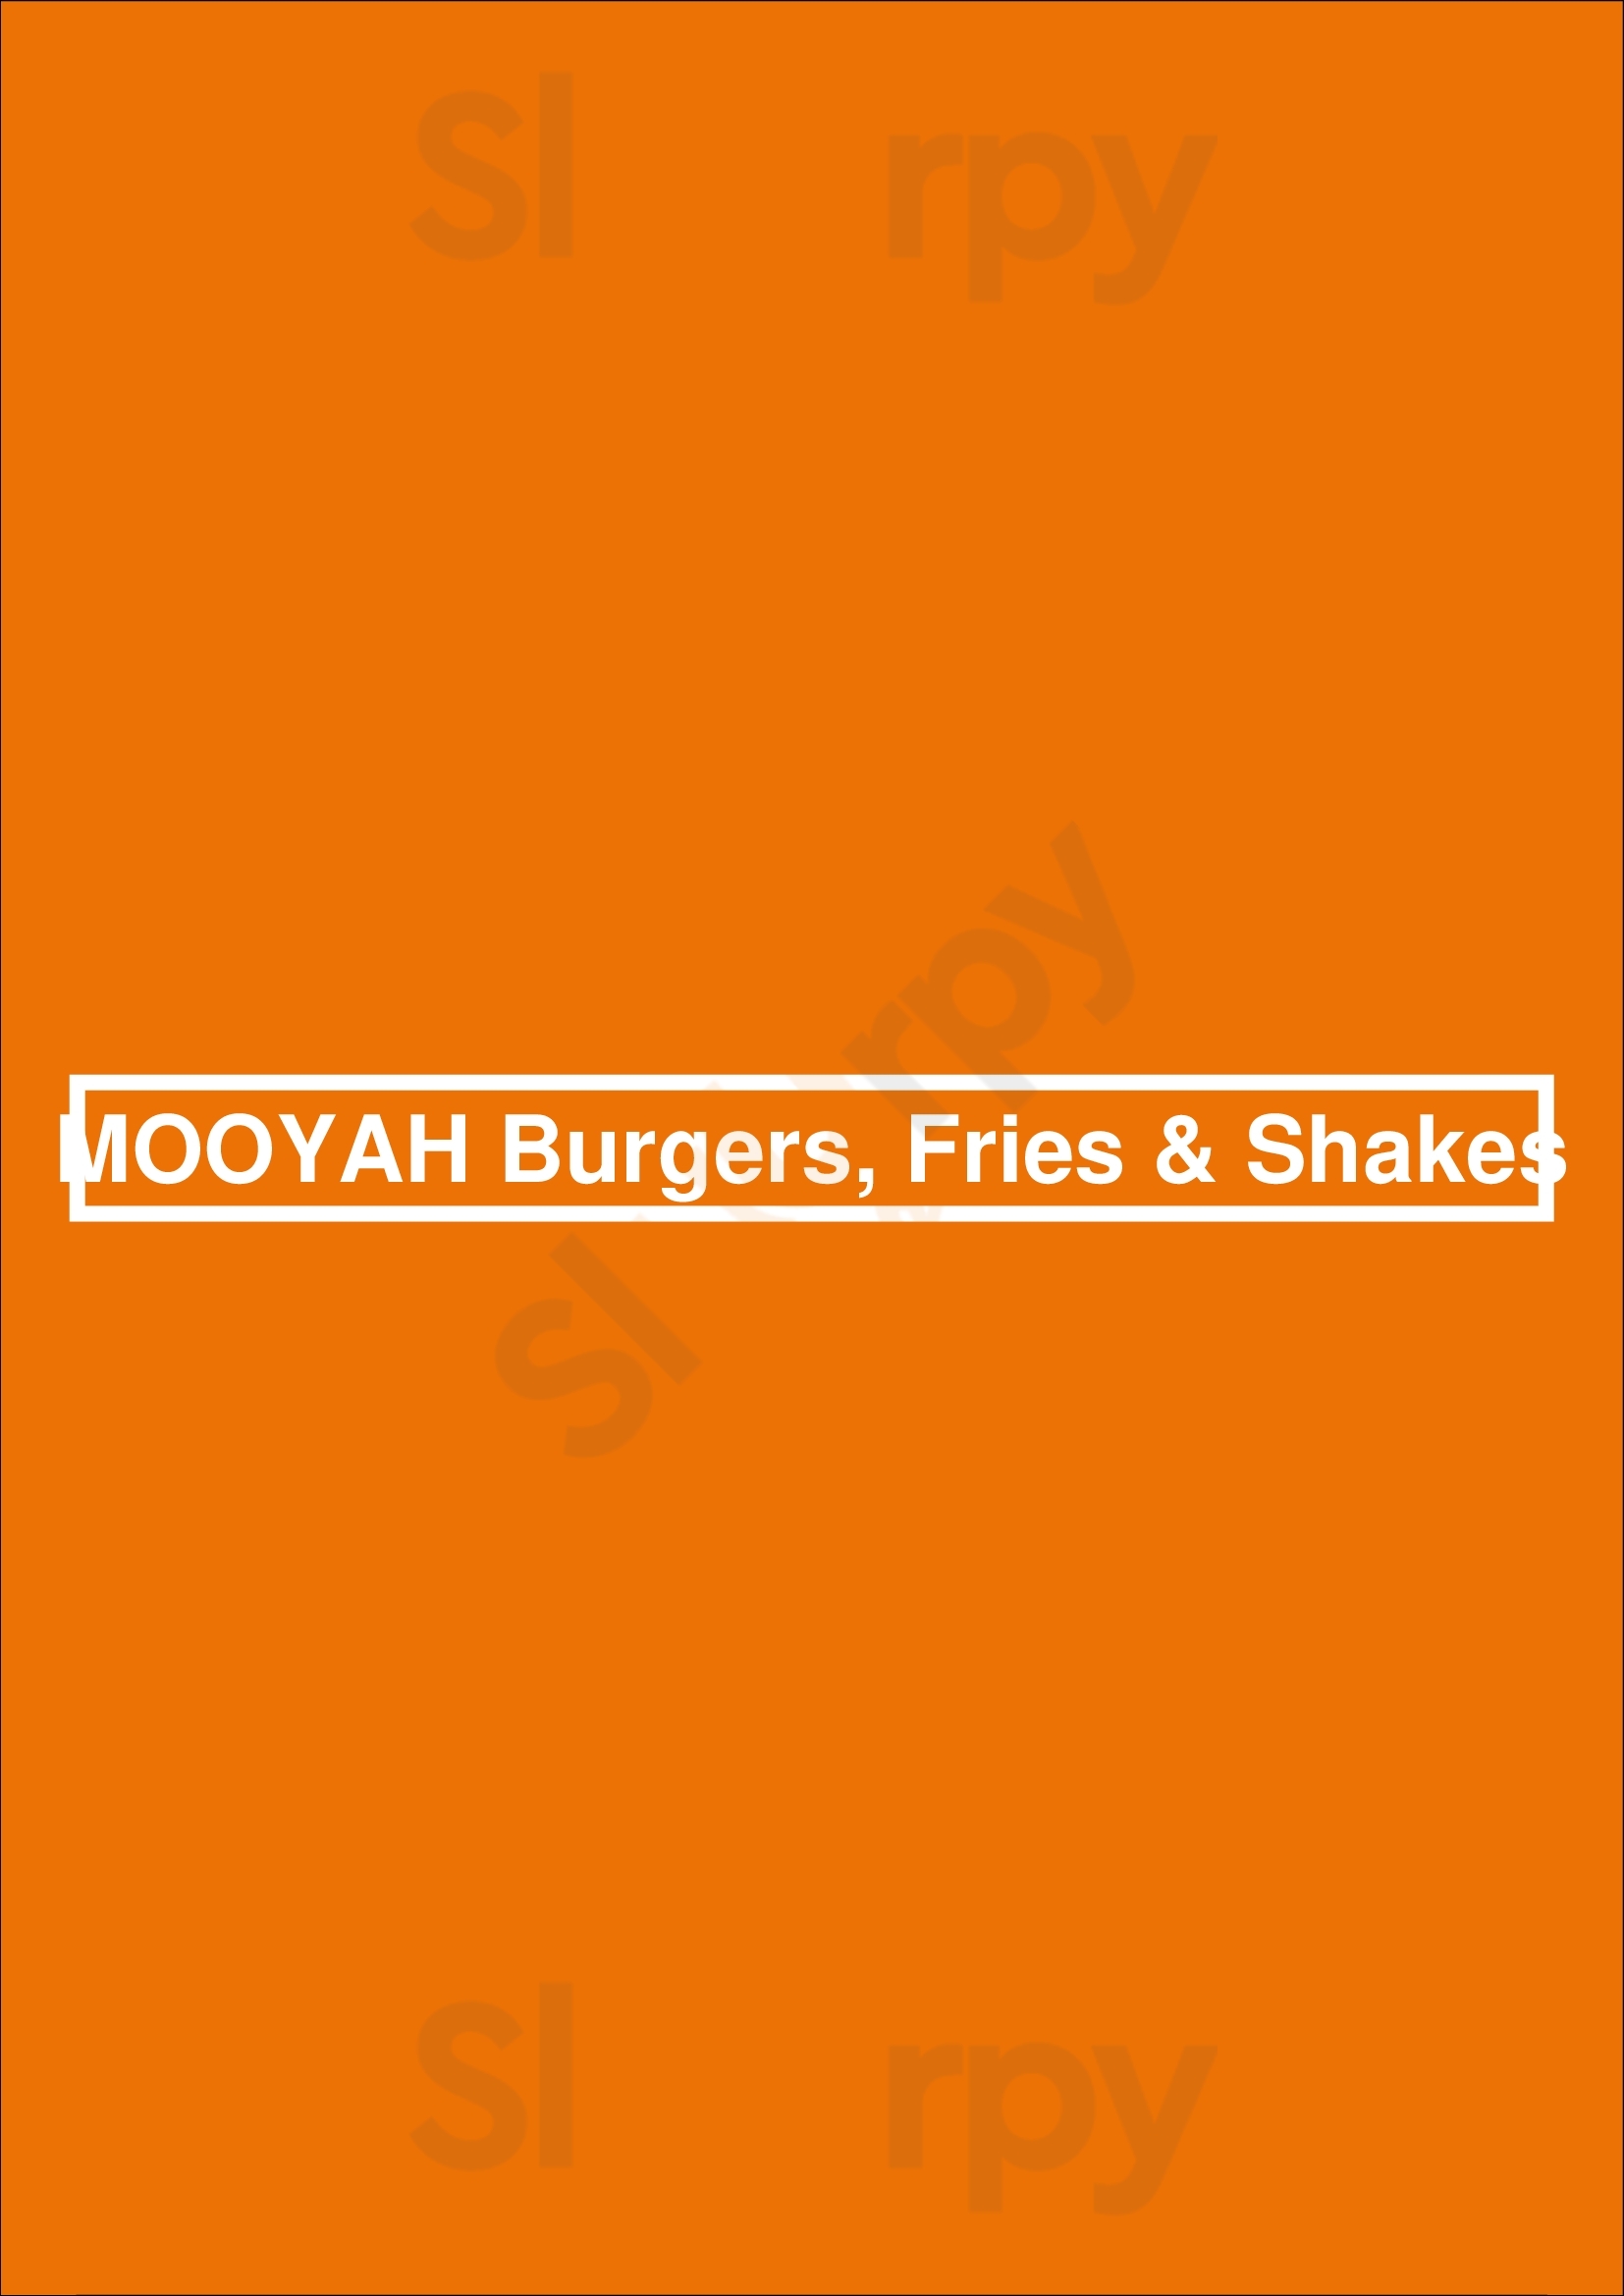 Mooyah Burgers, Fries & Shakes Birmingham Menu - 1